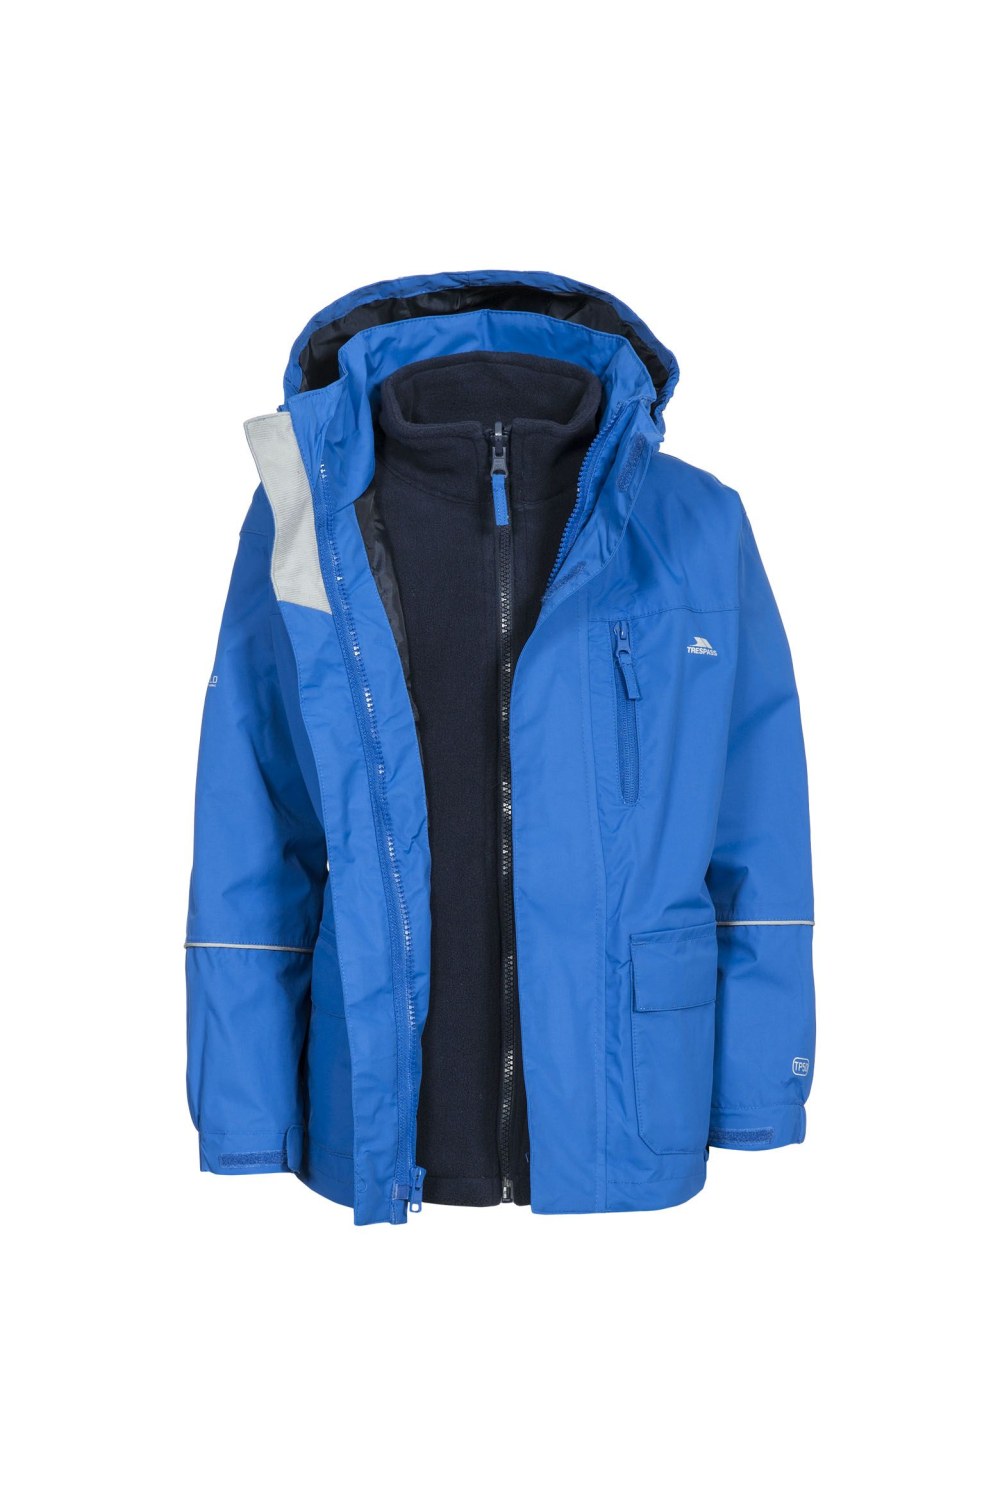 Trespass Childrens/Kids Prime II Waterproof 3-In-1 Jacket (Electric Blue)